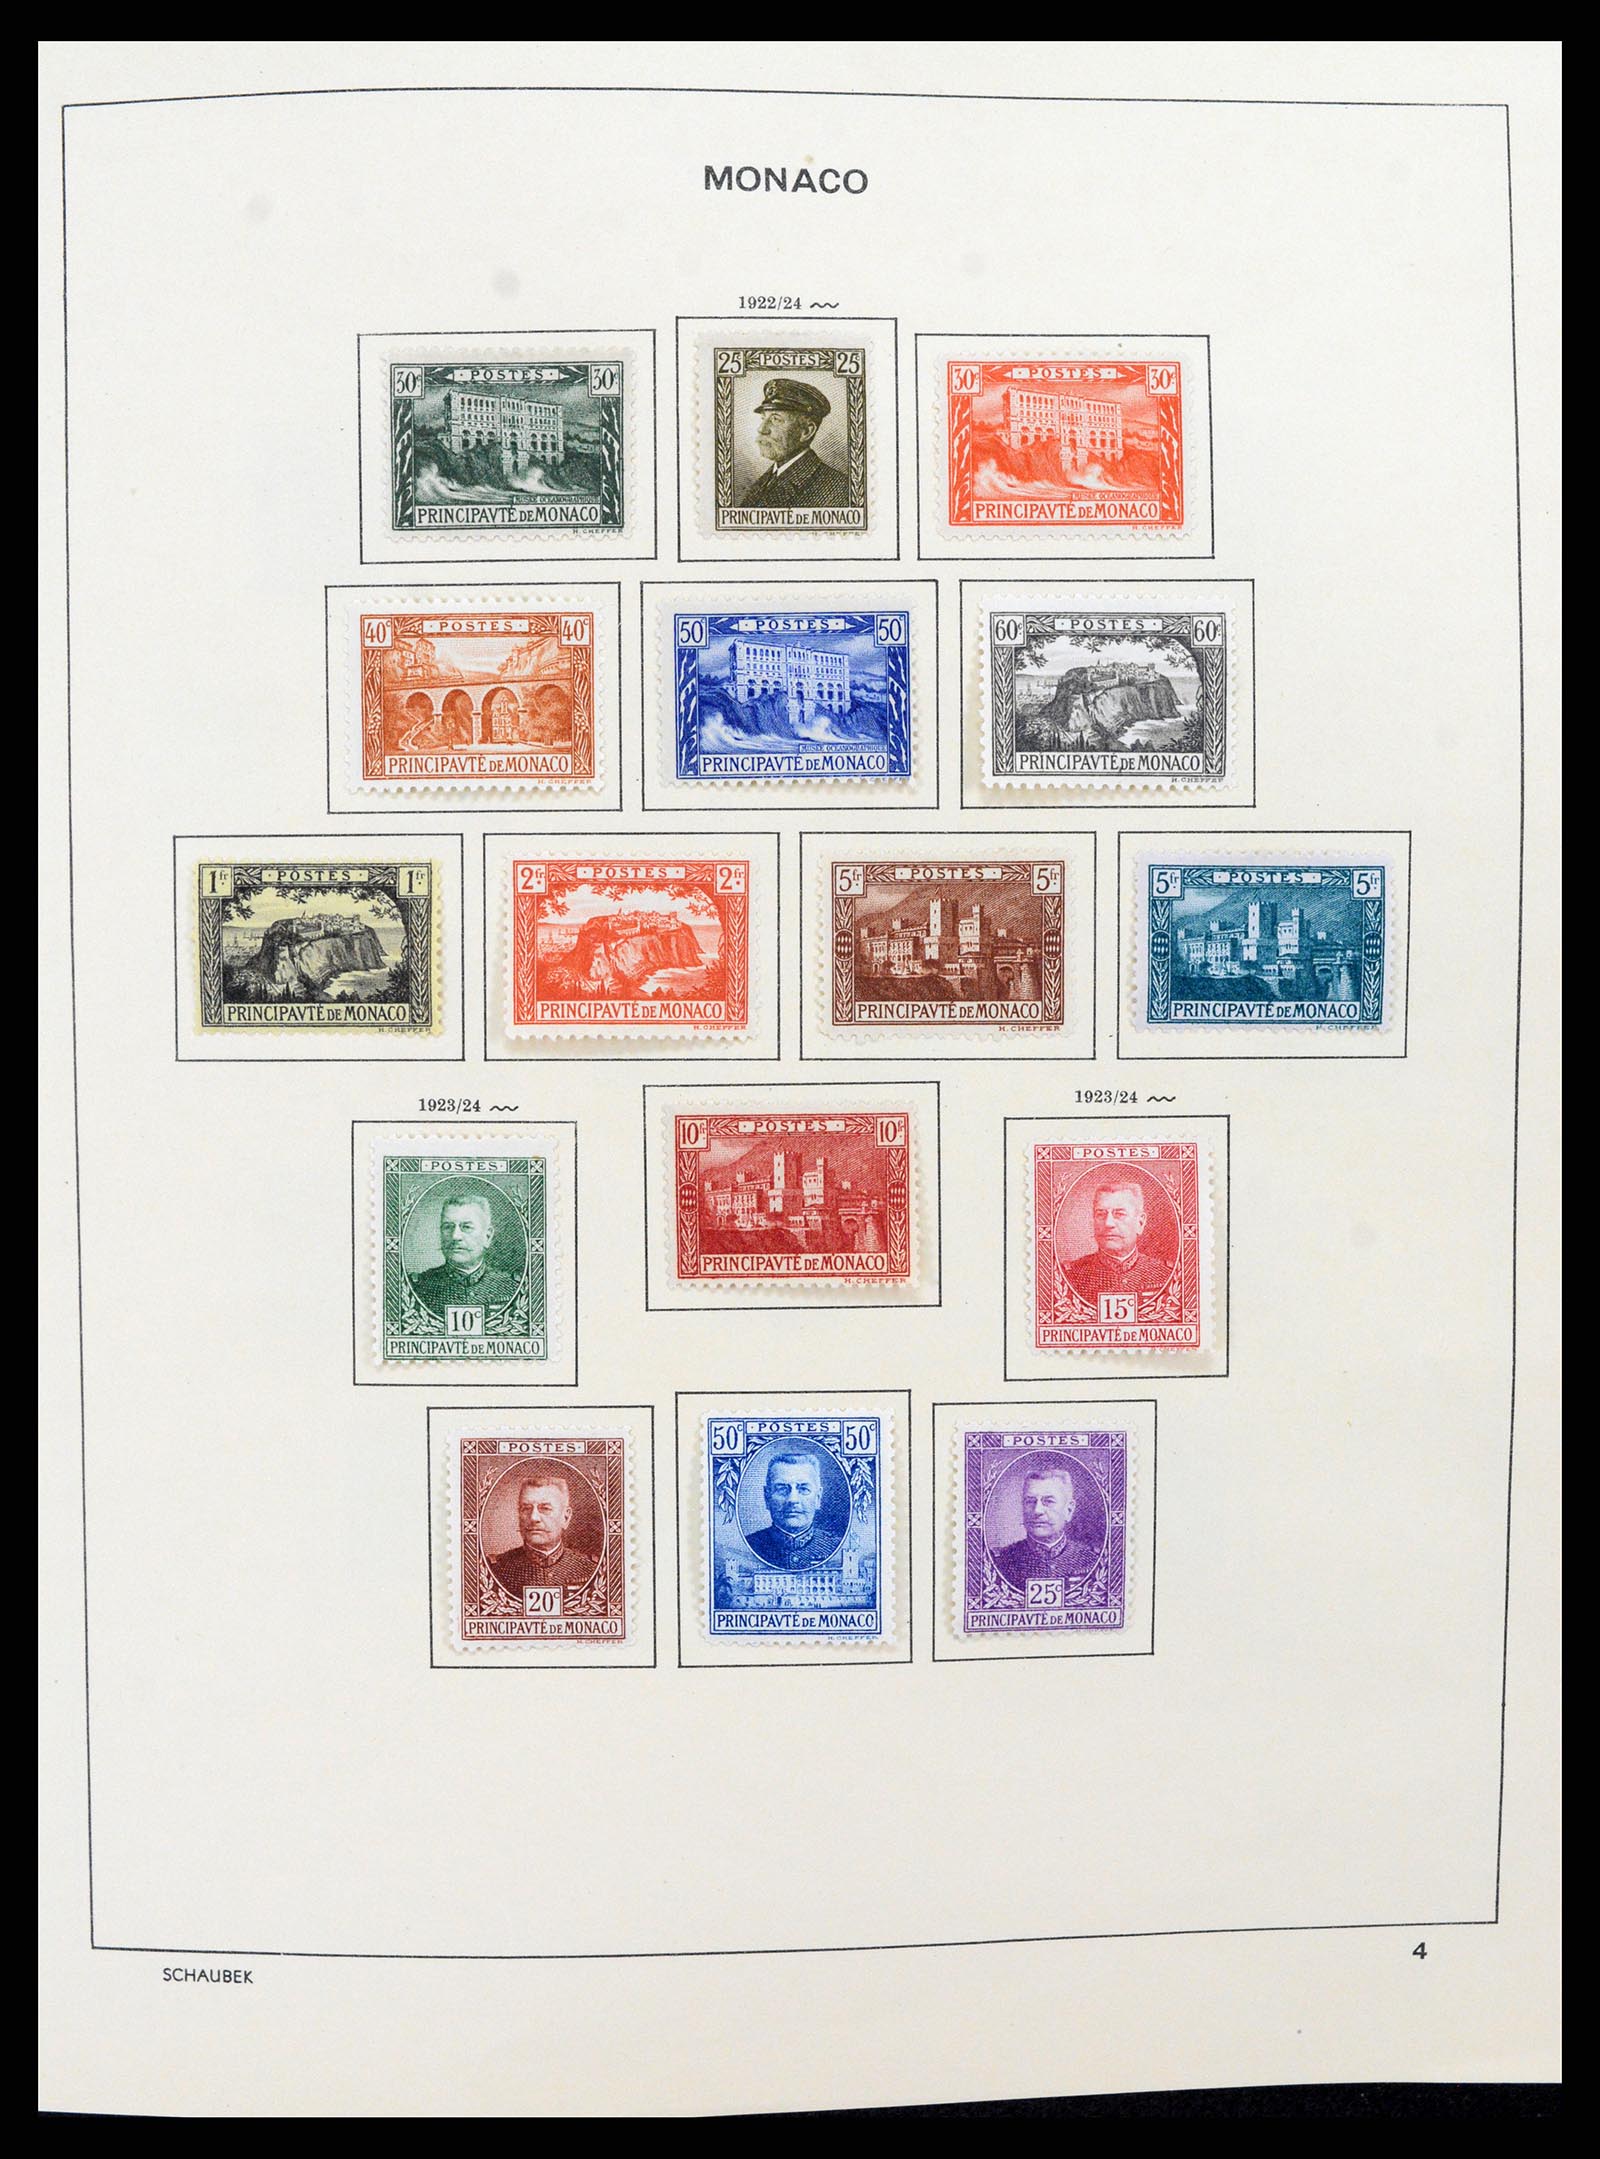 37570 004 - Stamp collection 37570 Monaco 1885-2013.